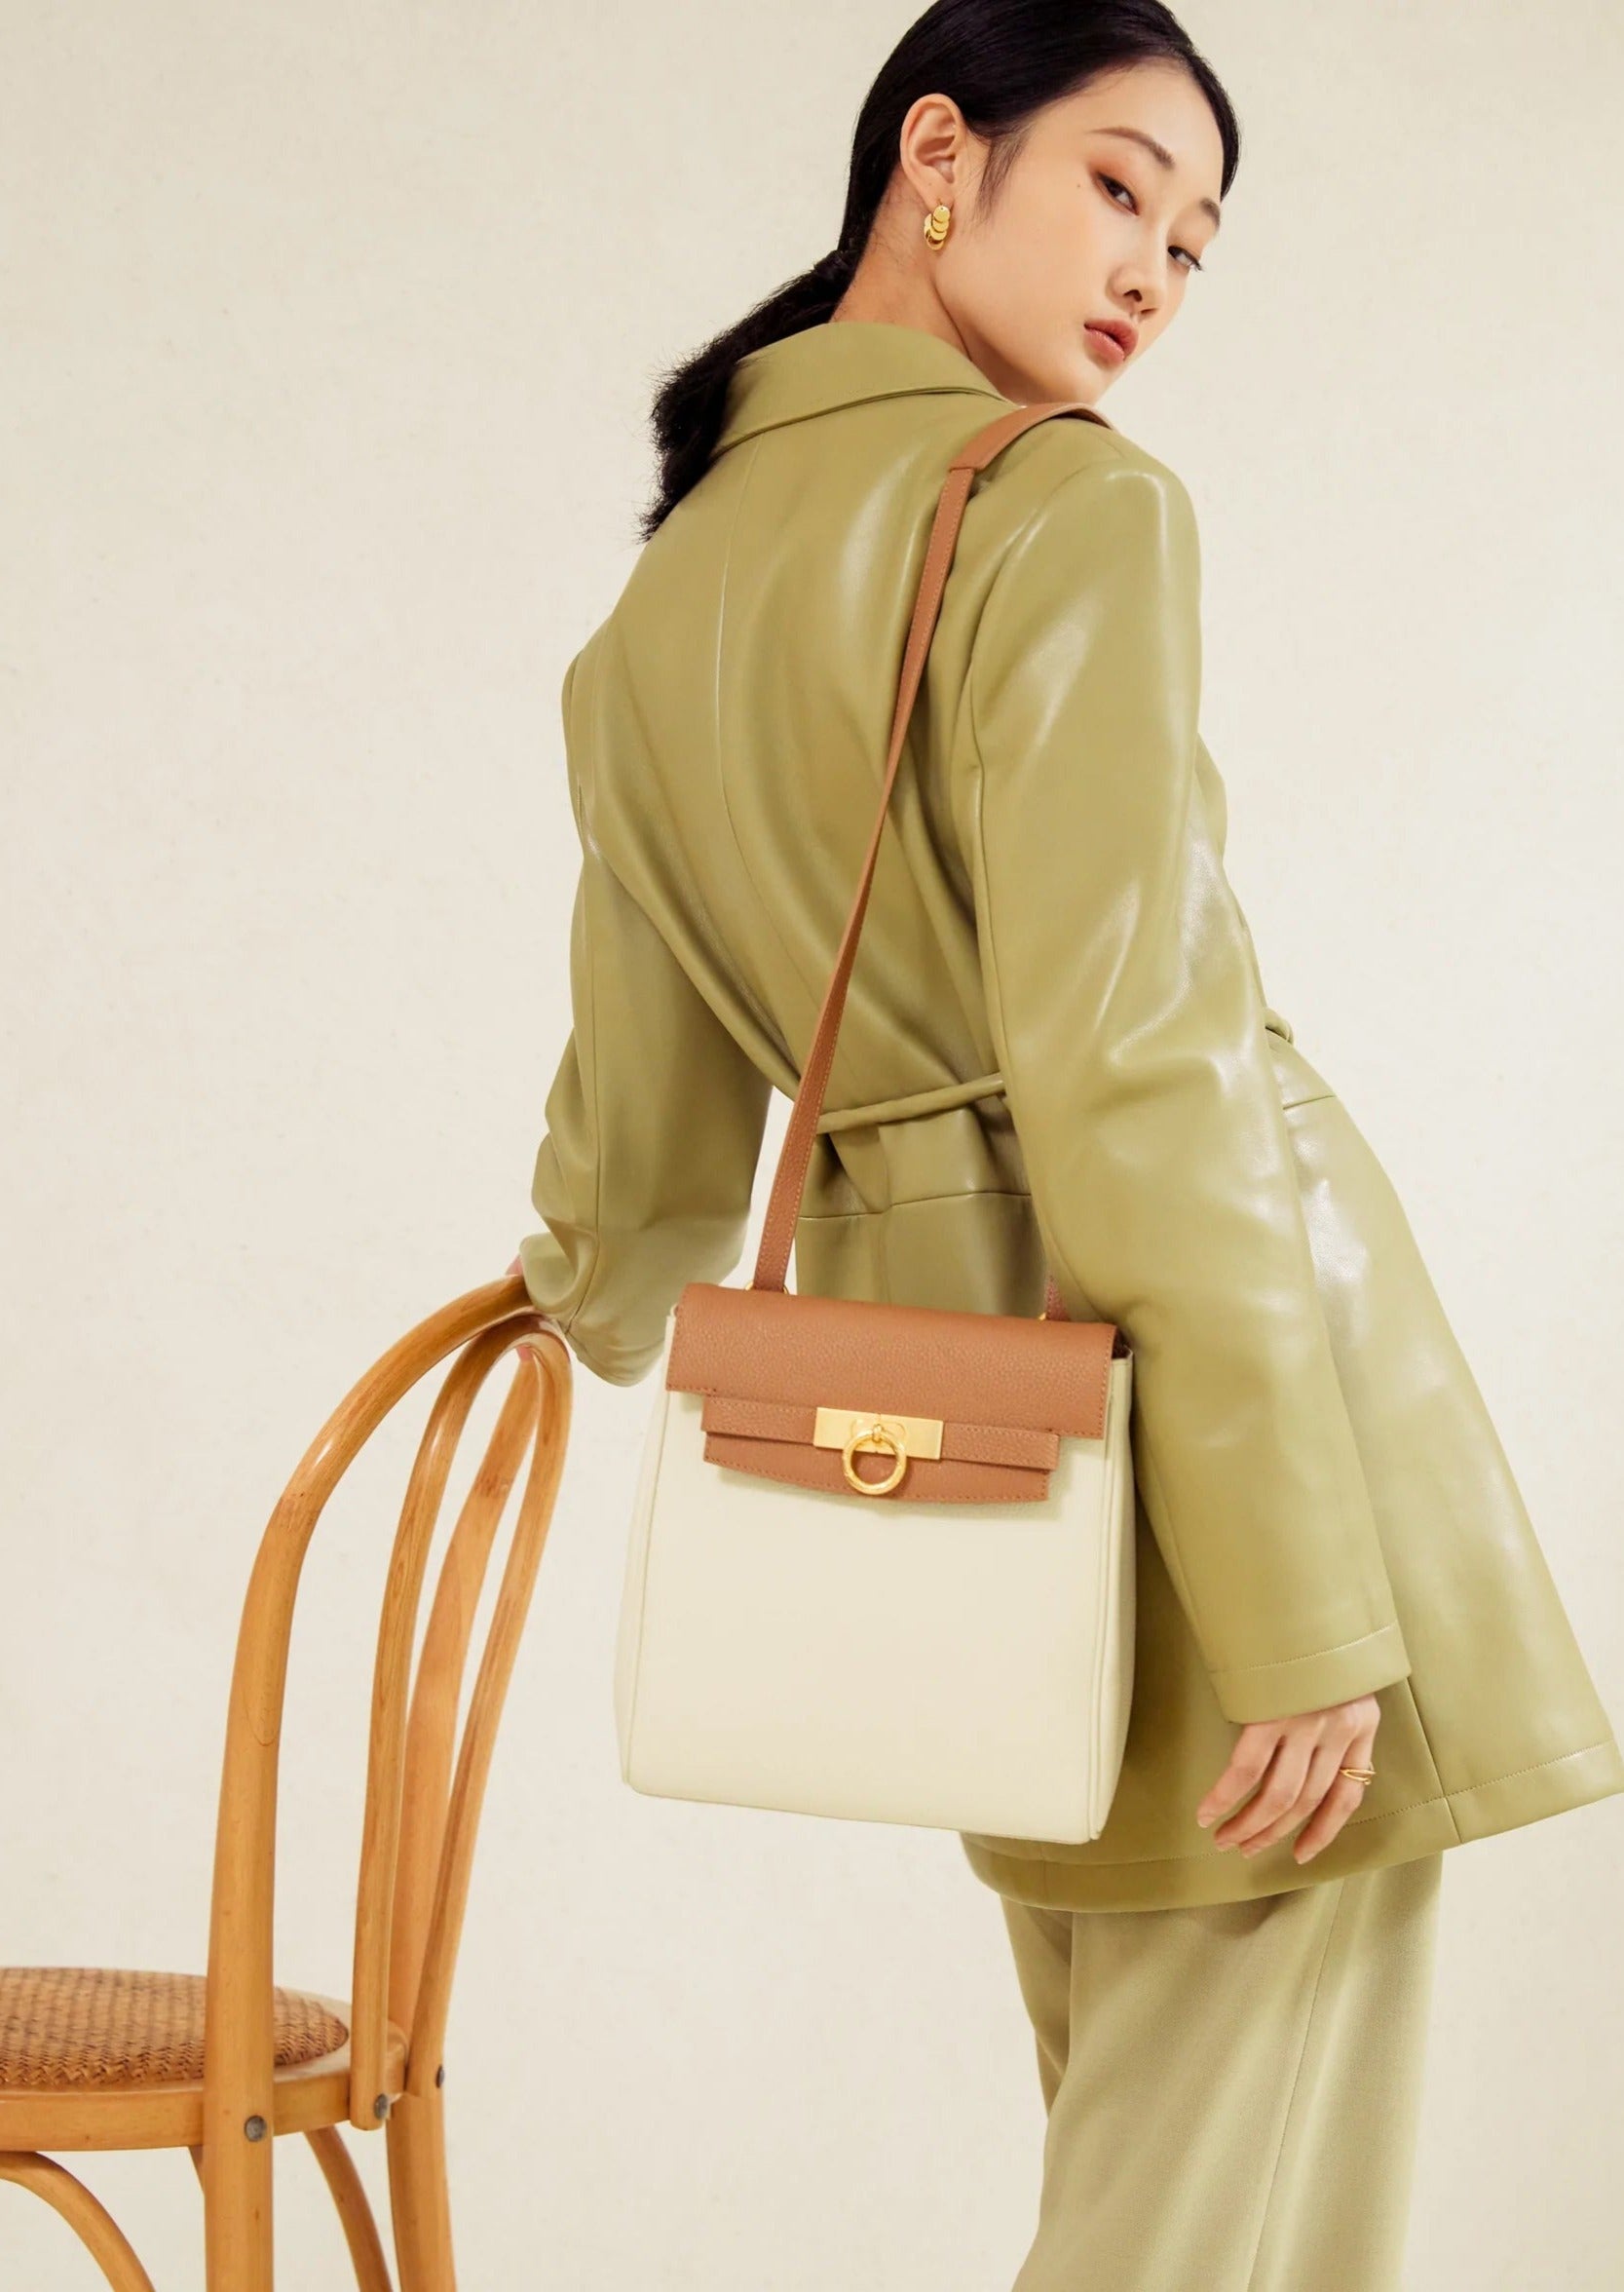 Kelly Backpack Women's 2023 New Fashion Genuine Leather Women Bag